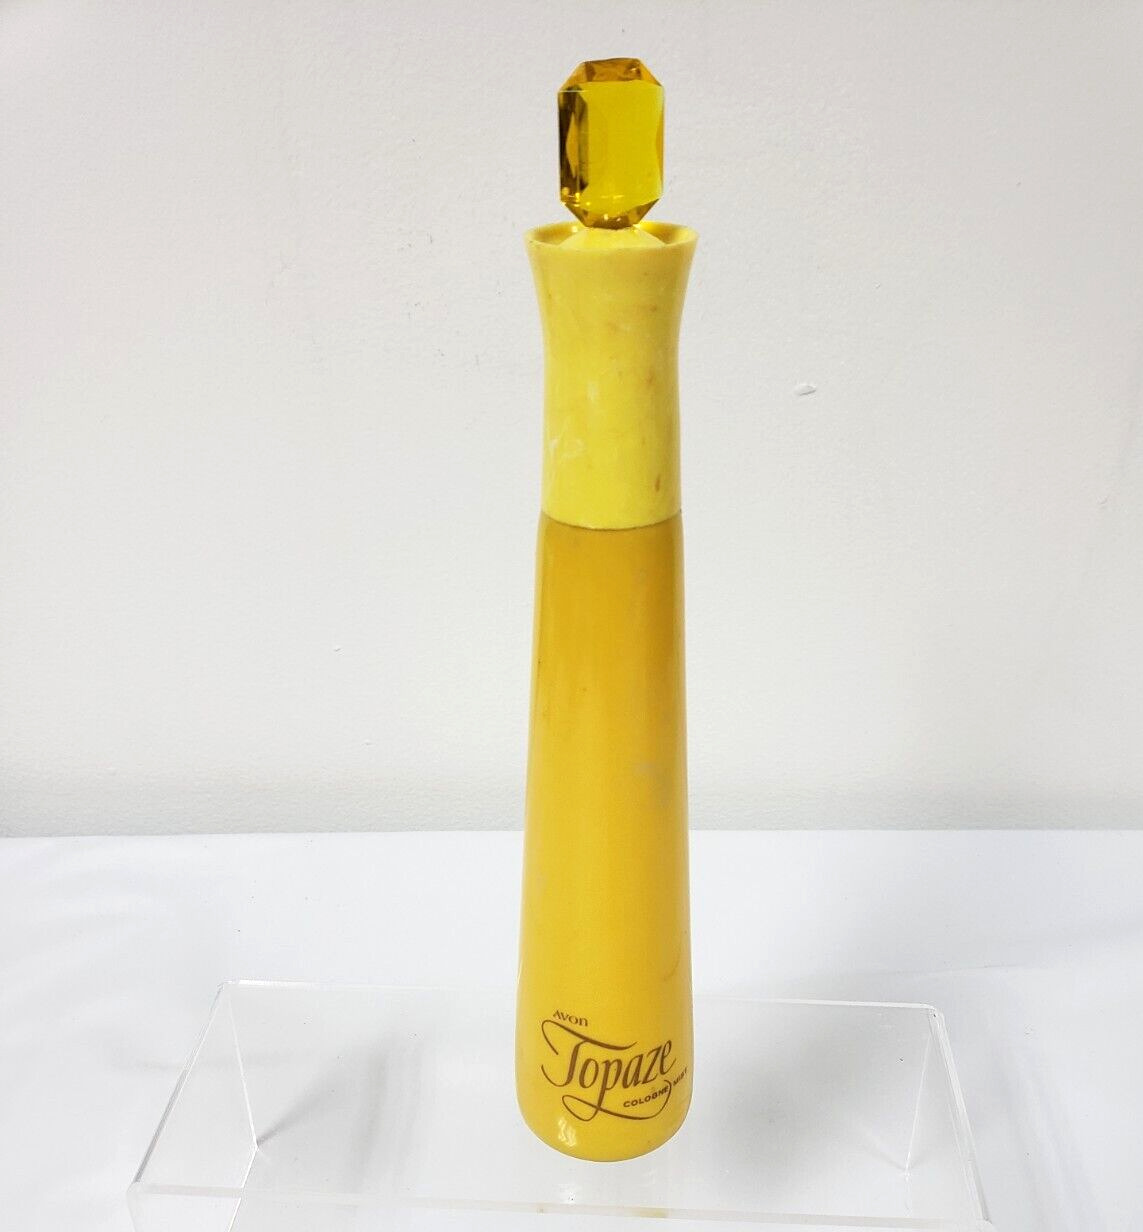 Vintage Avon Topaze 3 oz. Cologne Perfume Spray  EMPTY Bottle